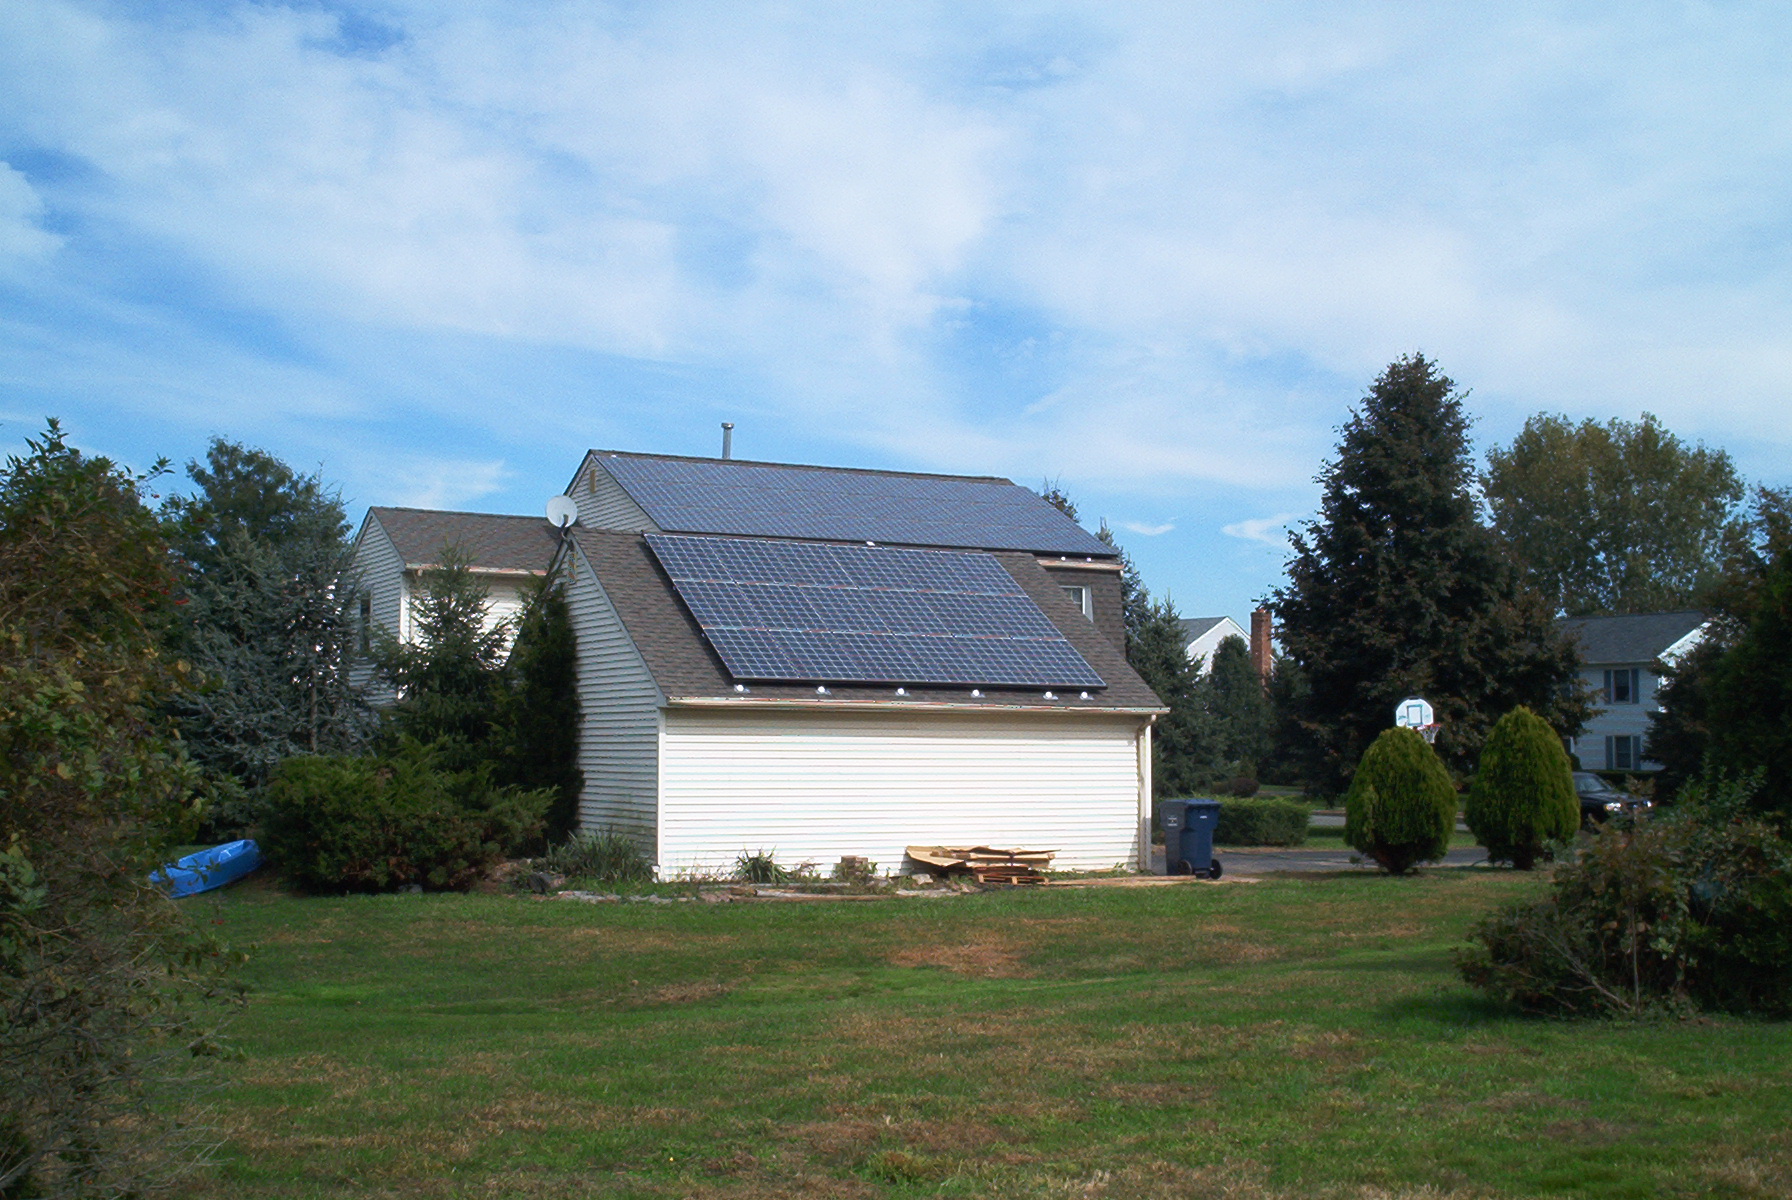 Home with solar power NJ